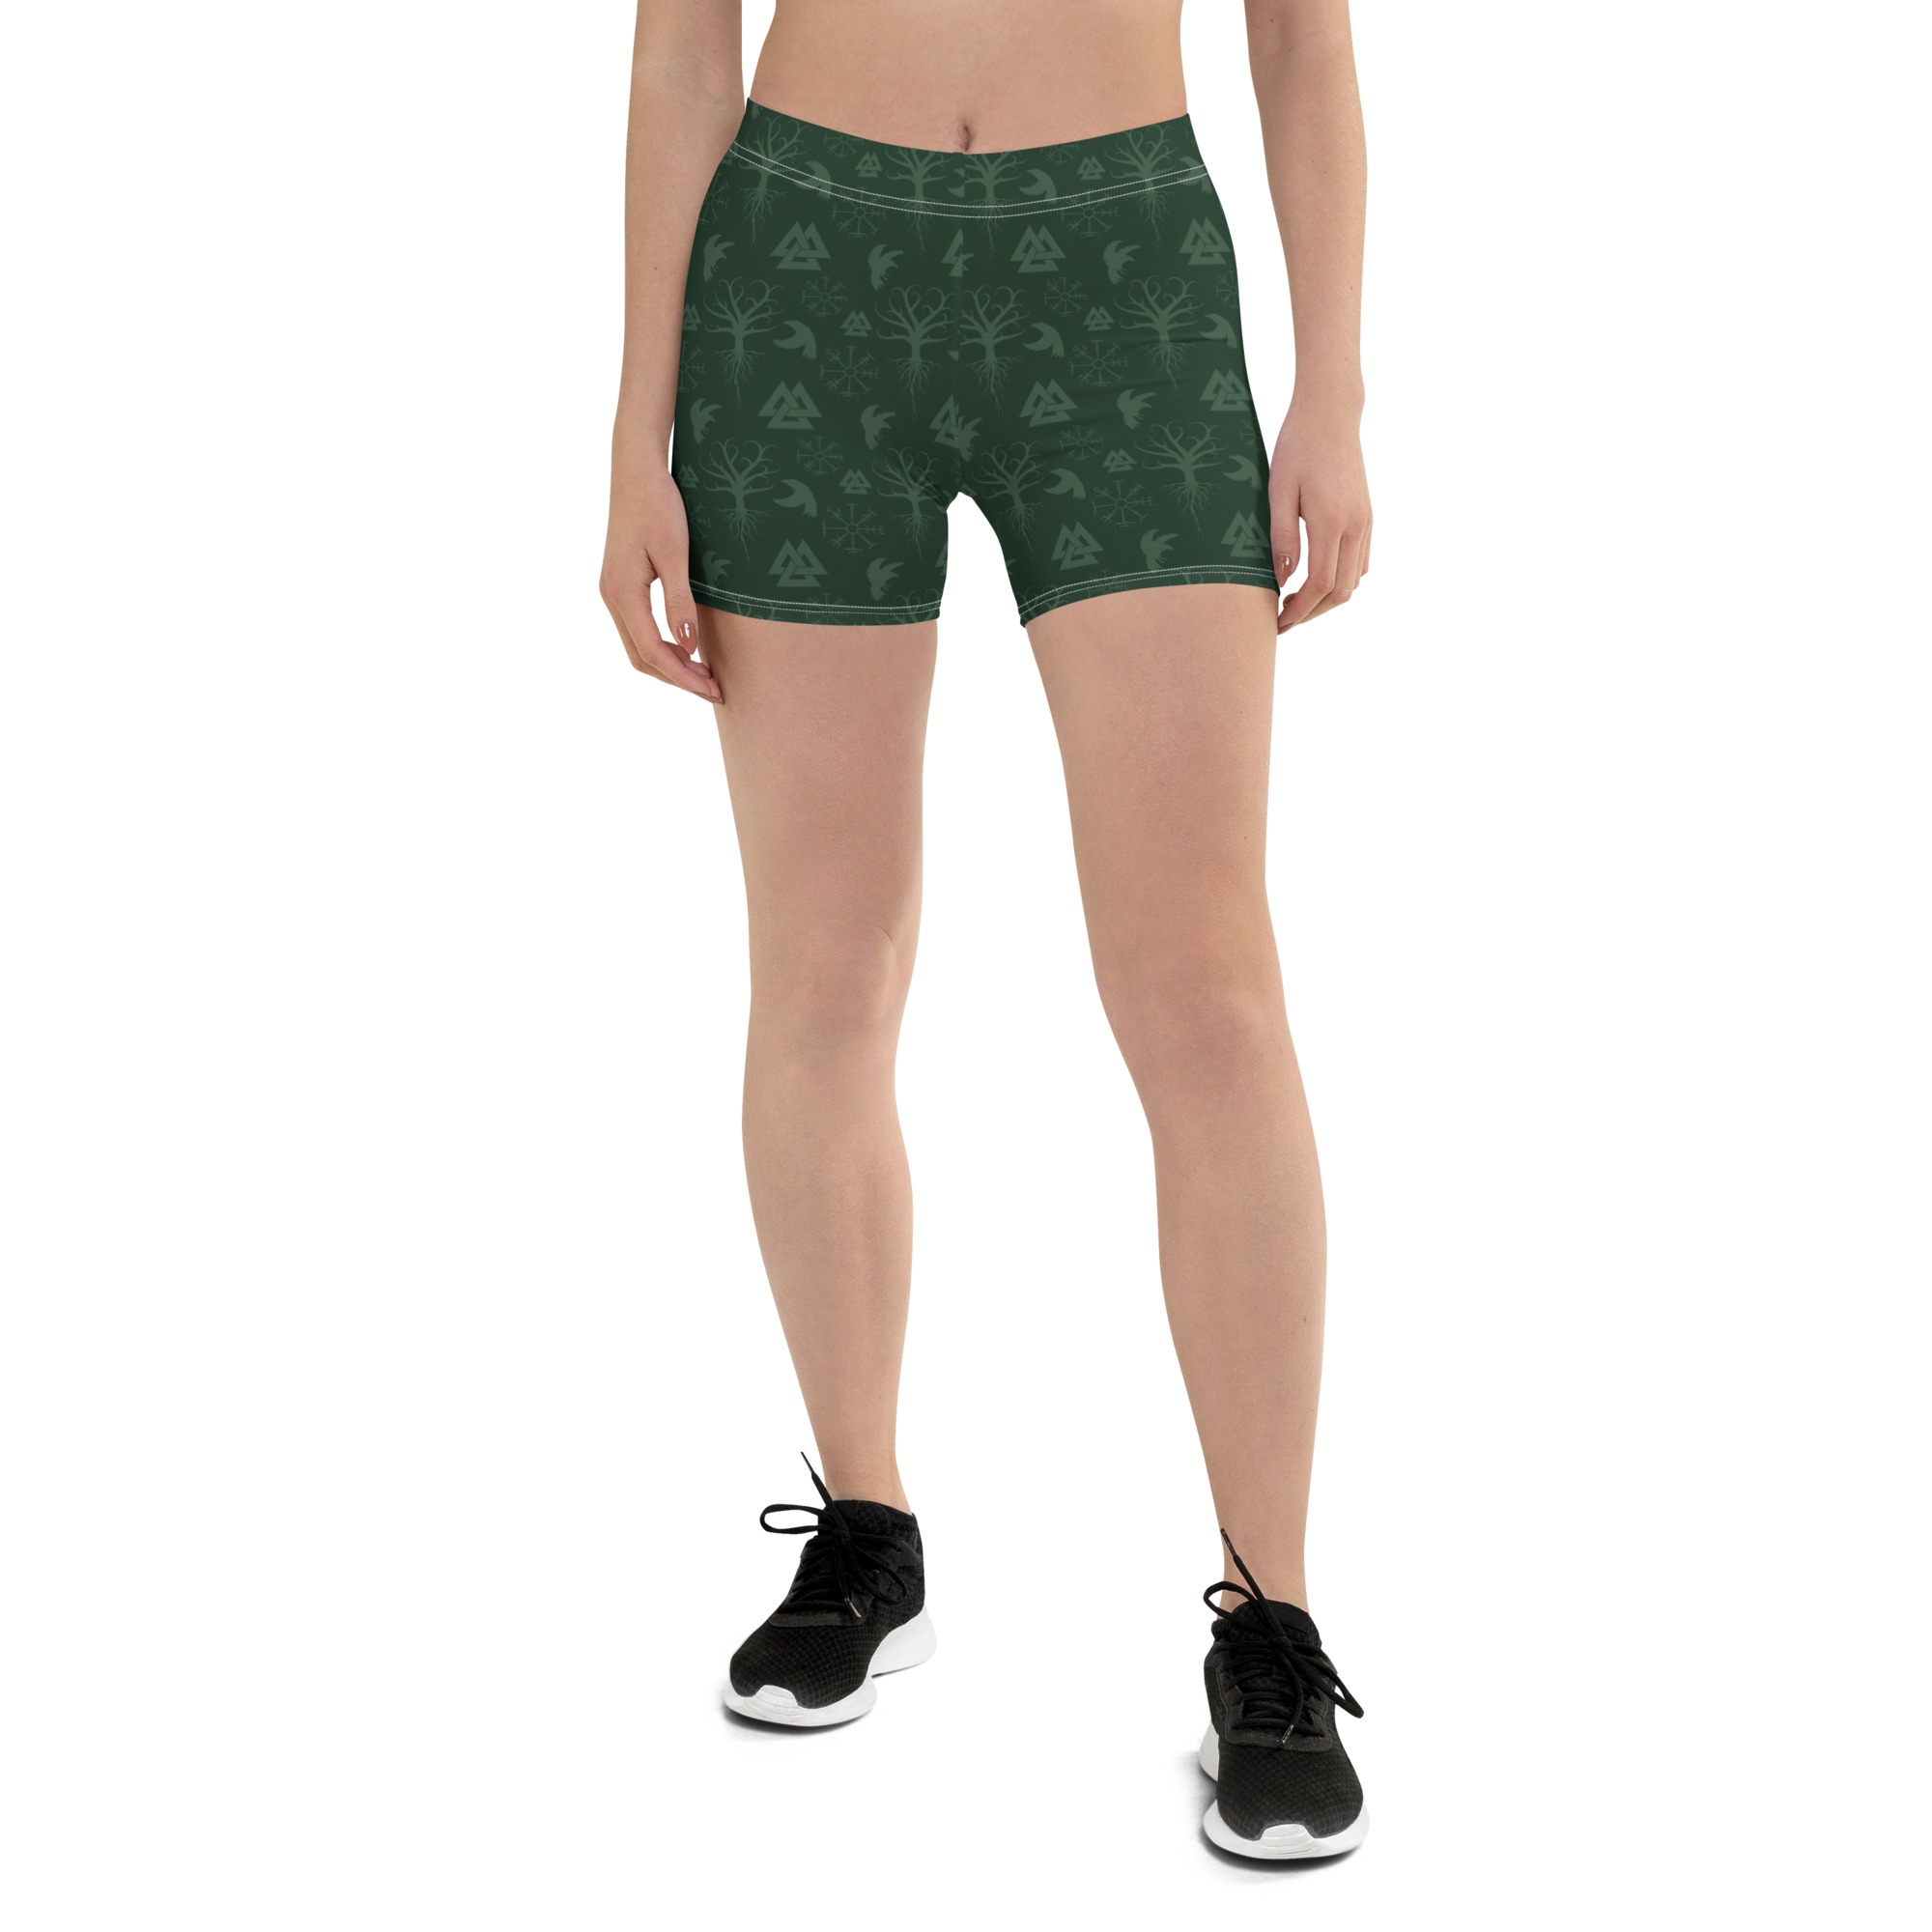 Green Norse Symbols Shorts